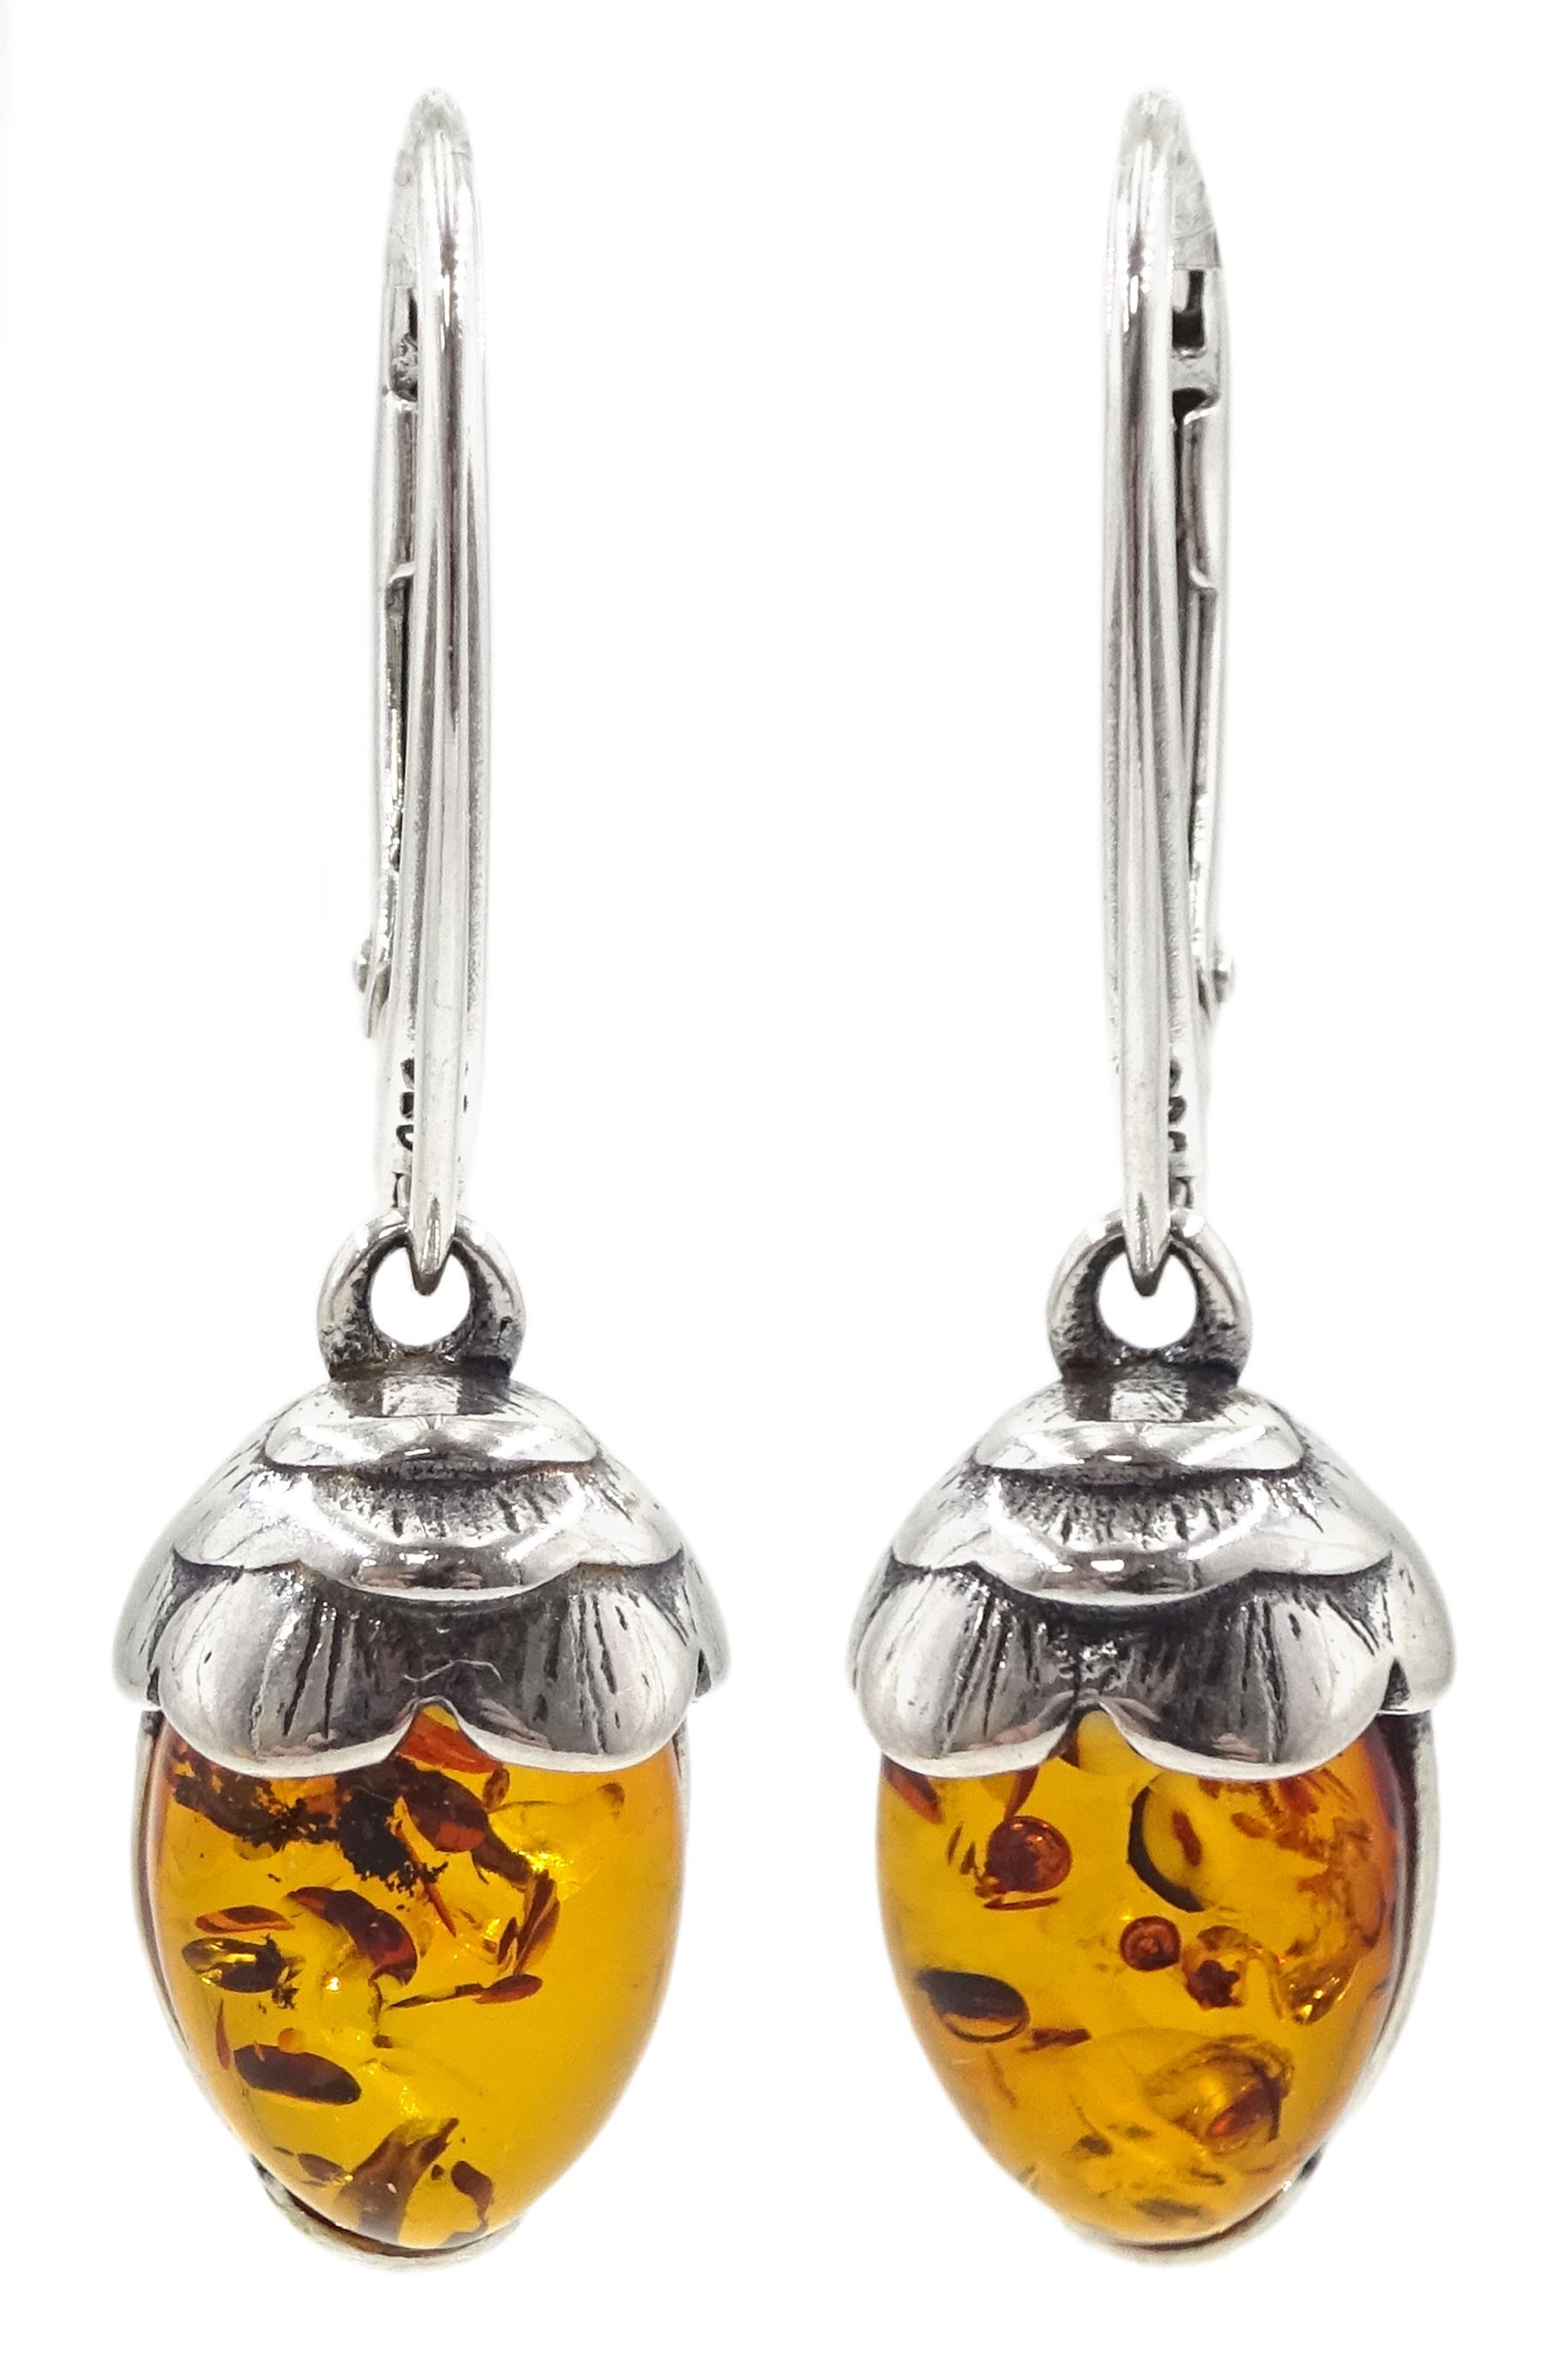 Pair of silver Baltic amber acorn pendant earrings